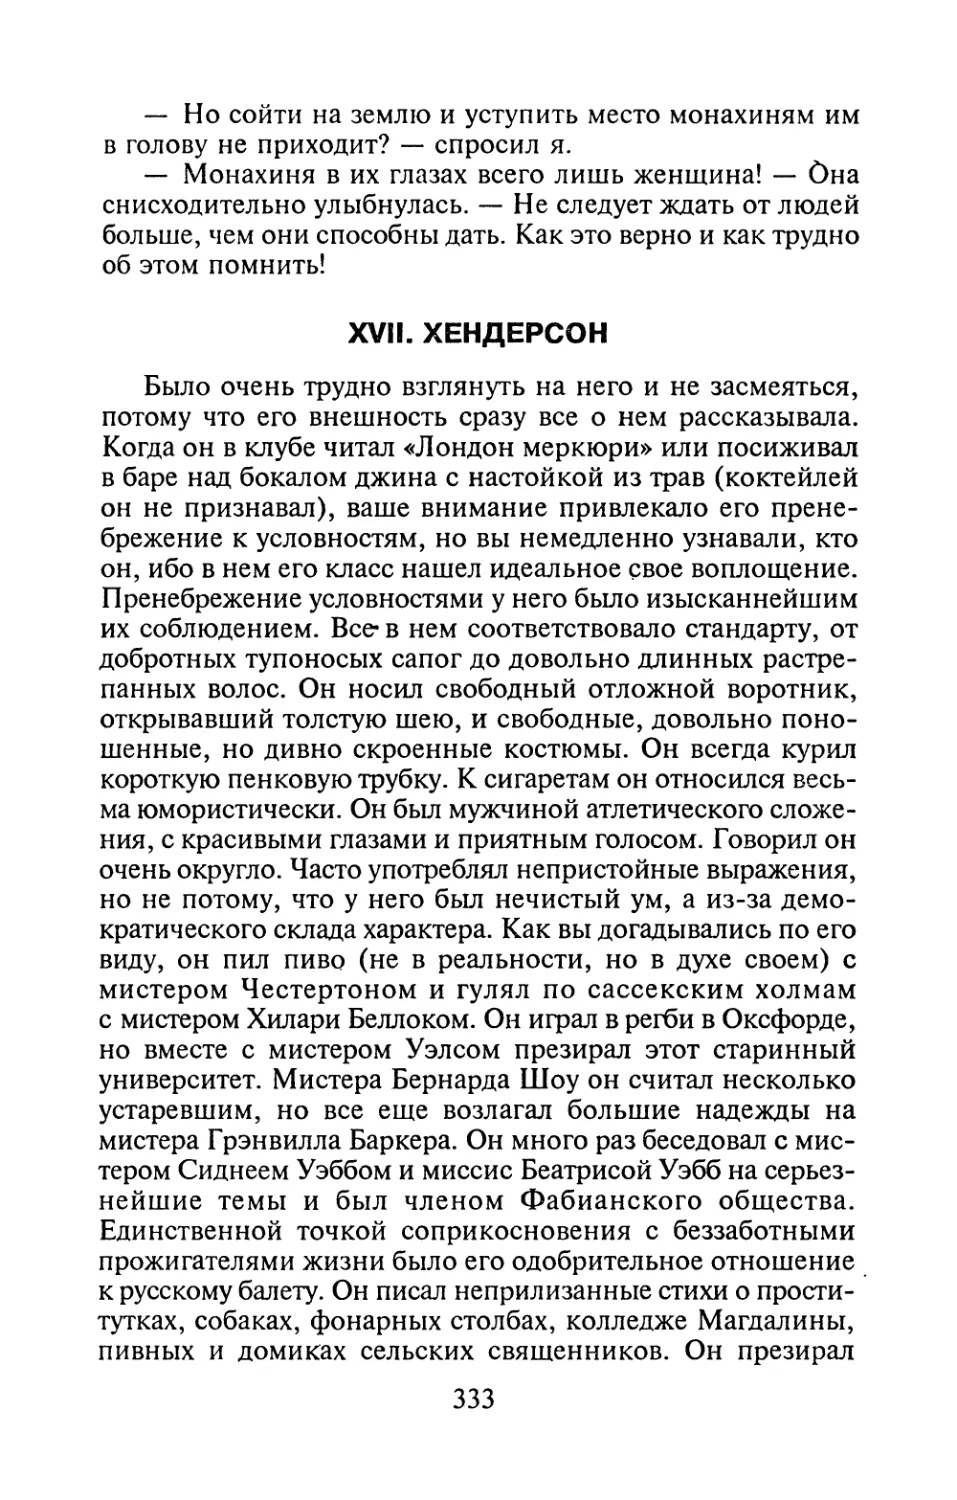 XVII. ХЕНДЕРСОН